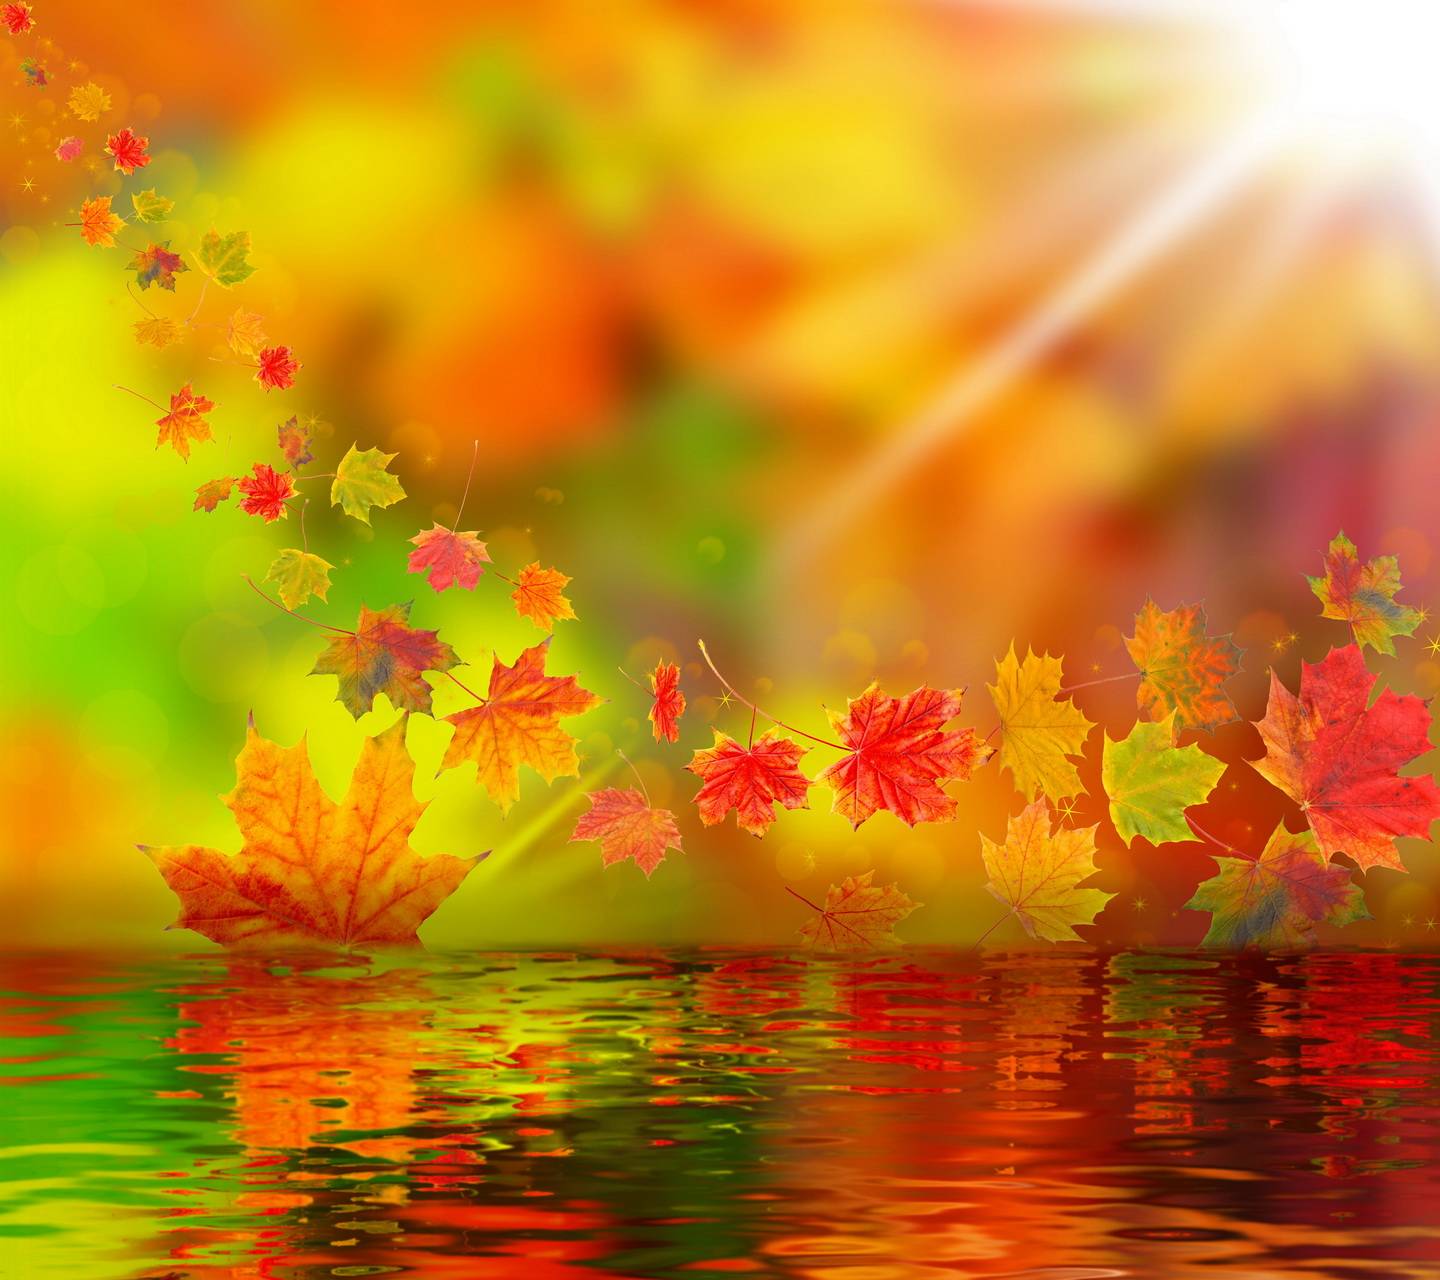 Autumn Scenery wallpaper